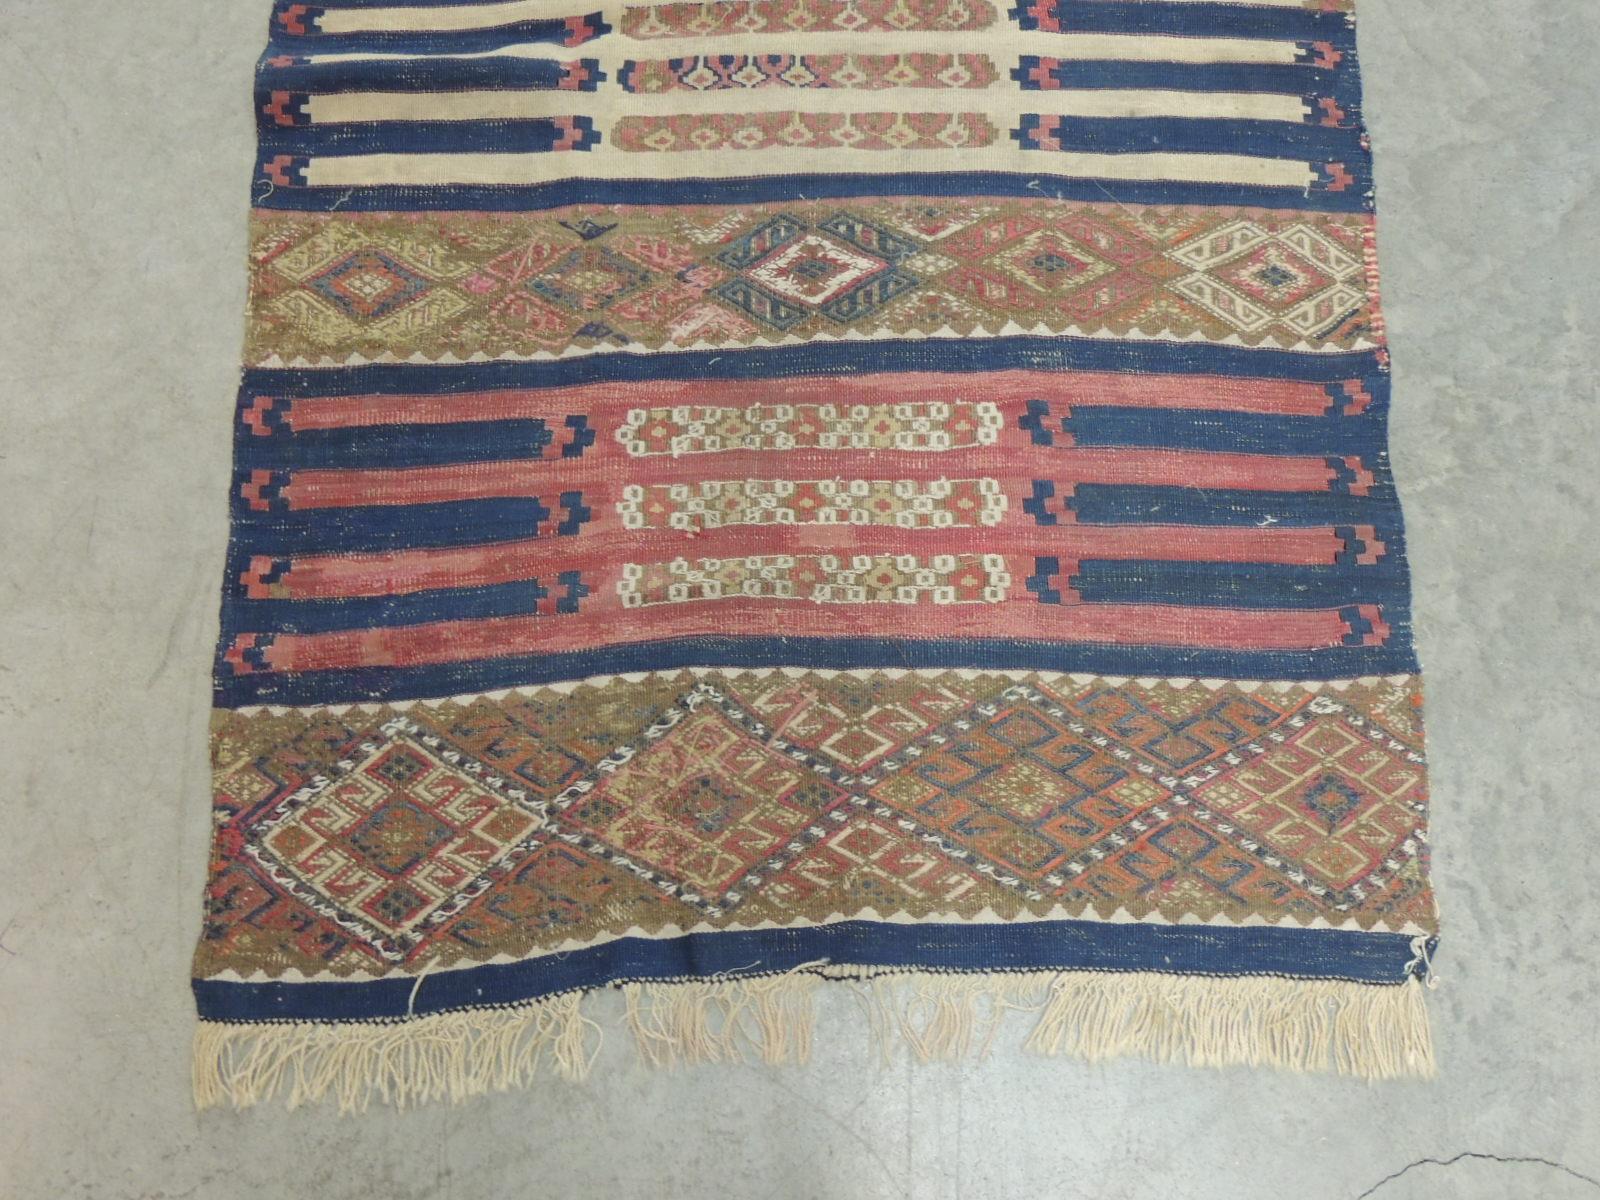 Vintage red and blue Kilim rug.
Size: 36